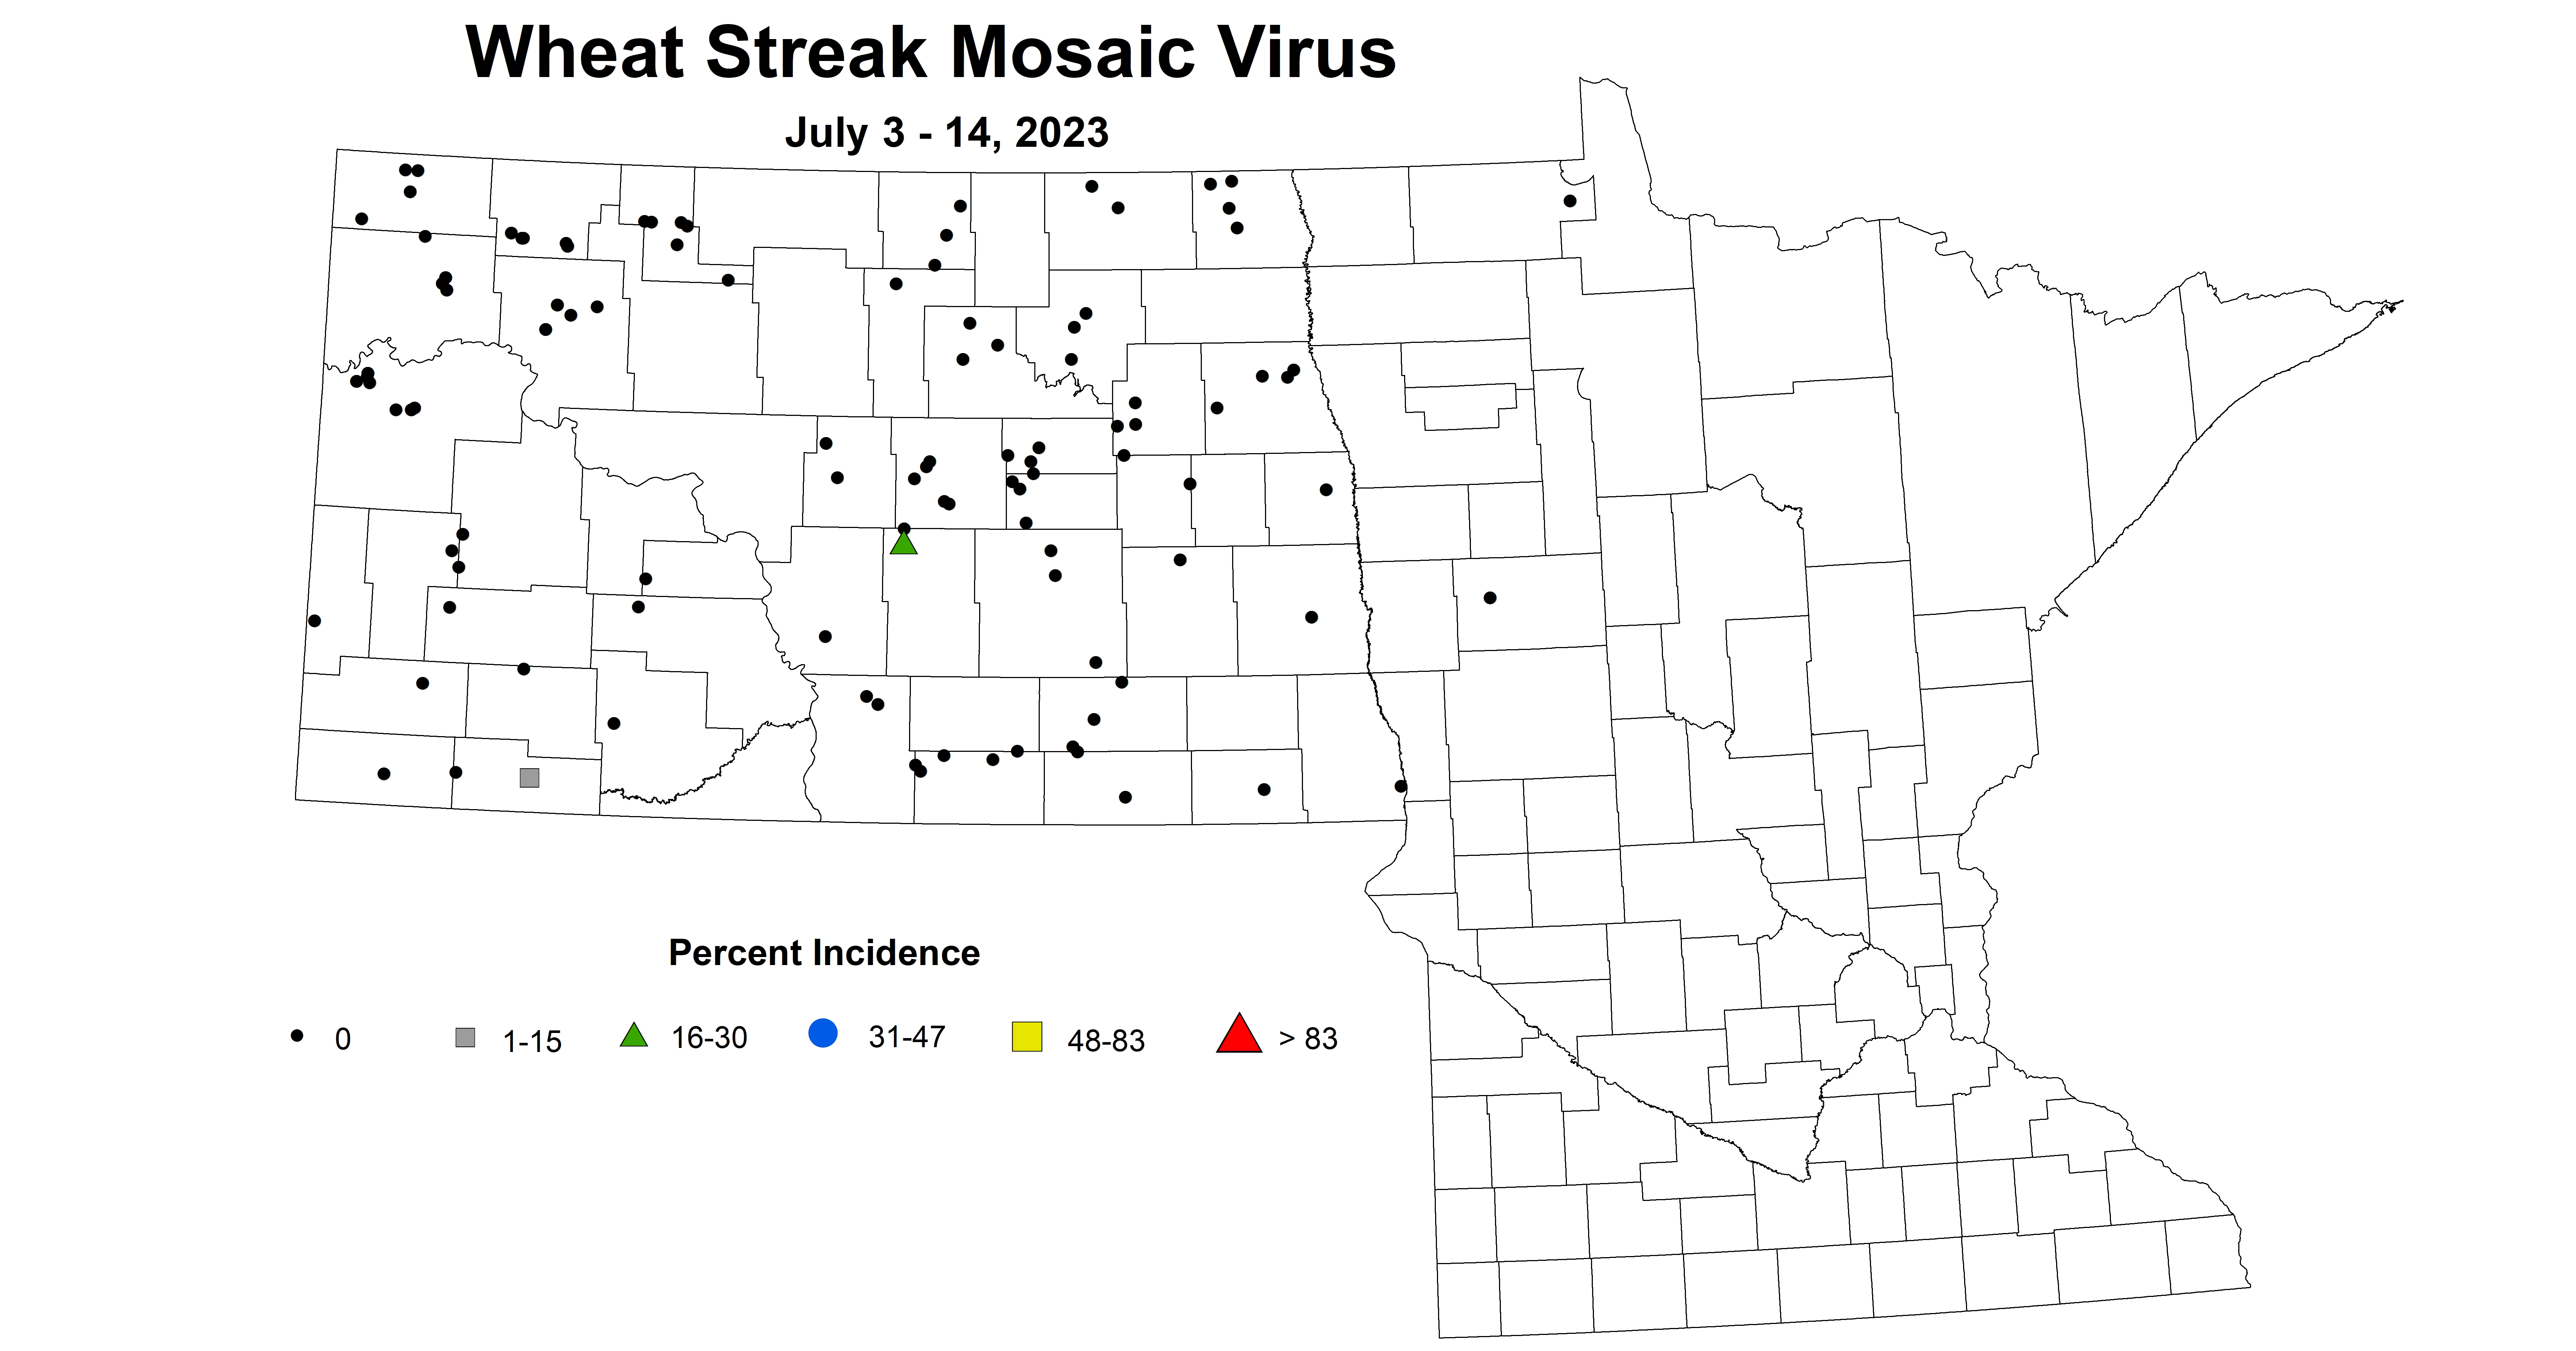 wheat streak mosaic virus July 3-14 2023